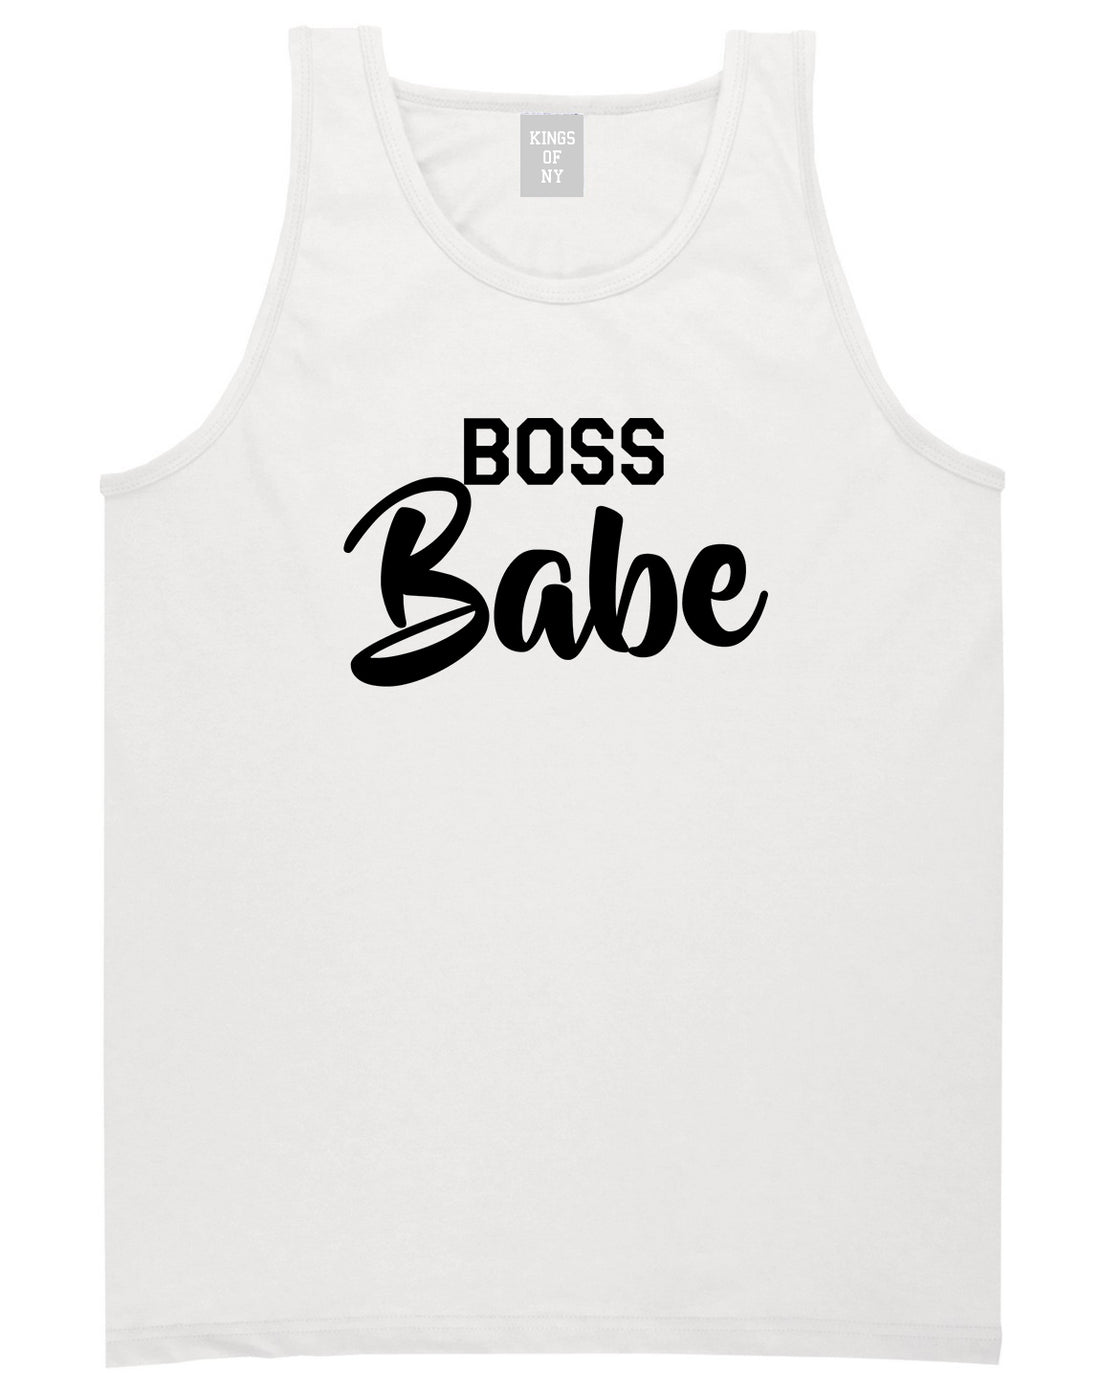 Boss Babe Mens White Tank Top Shirt by KINGS OF NY